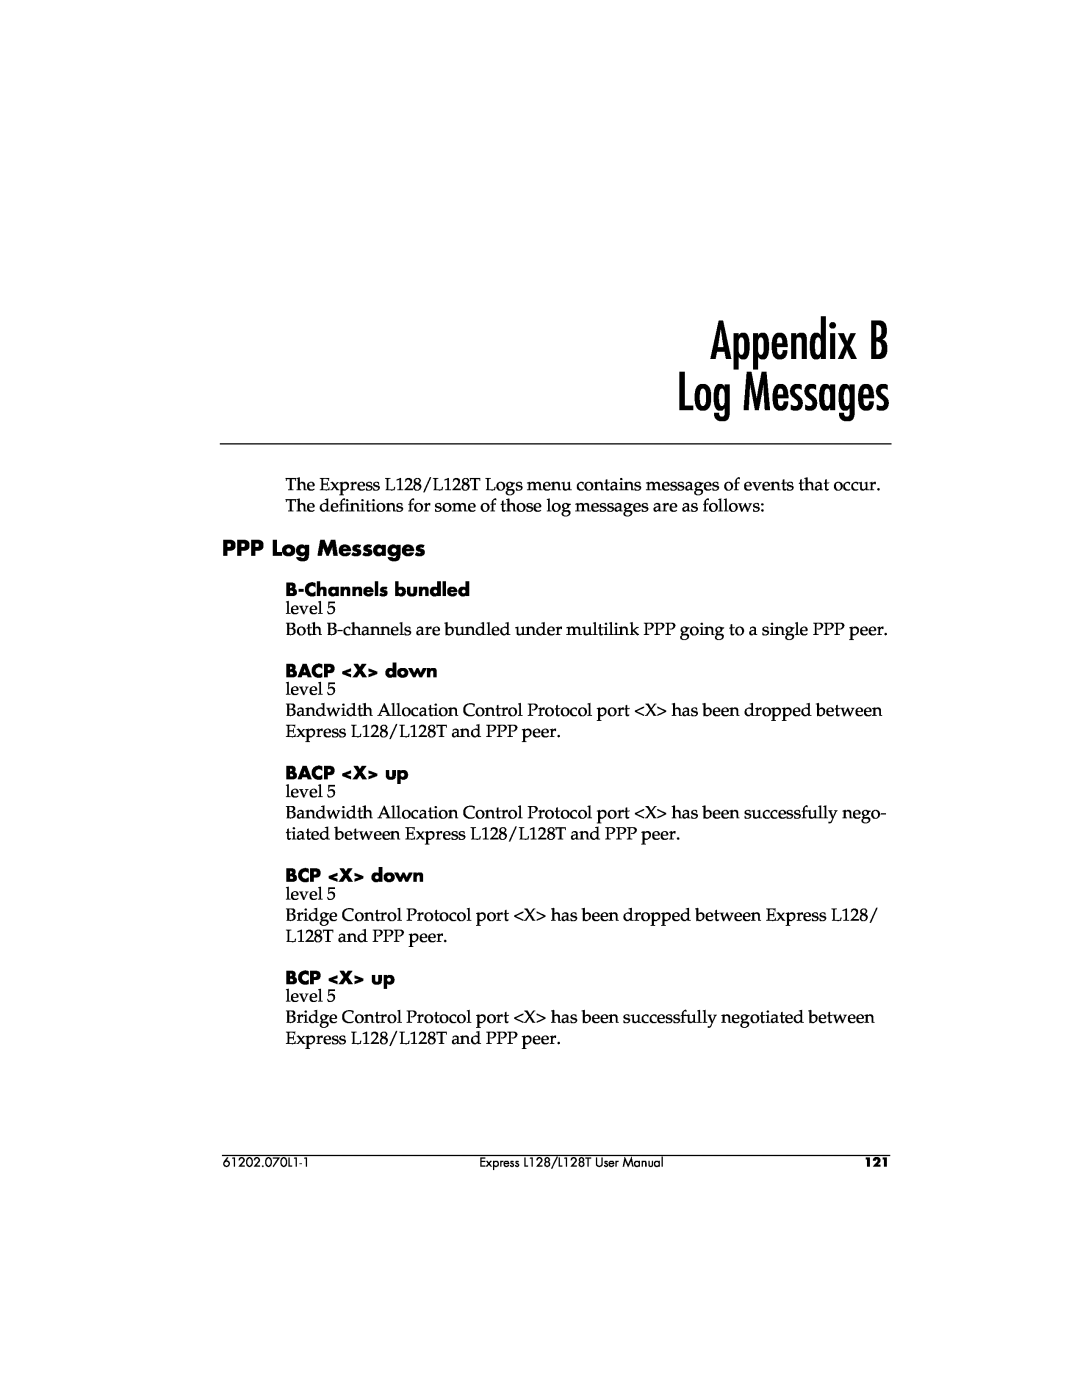 ADTRAN L128T user manual Appendix B Log Messages, PPP Log Messages 